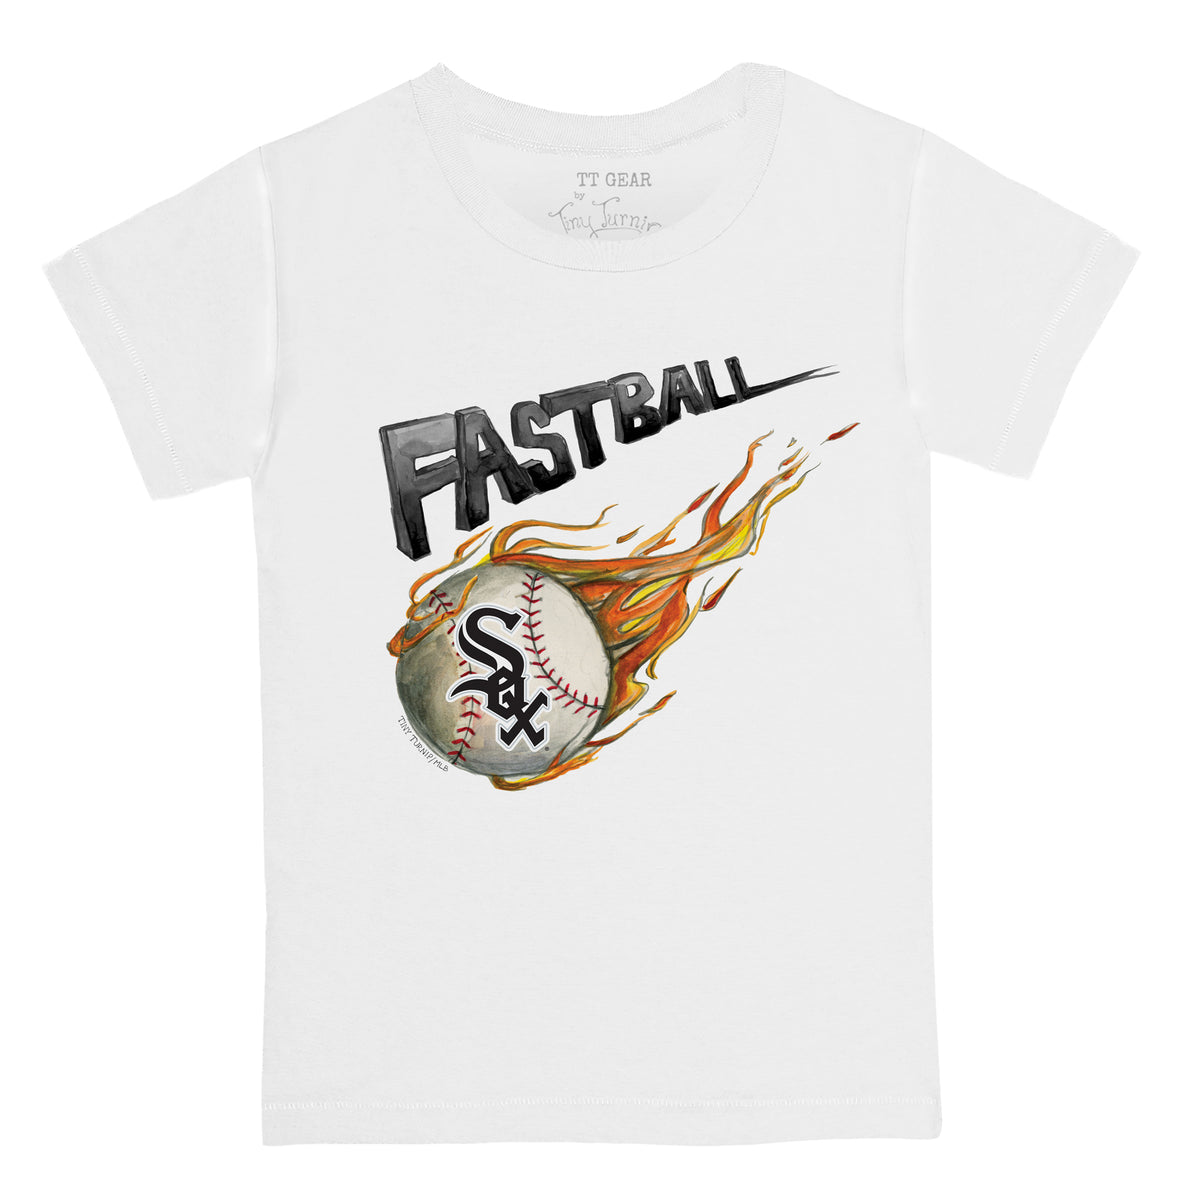 Chicago White Sox Fastball Tee Shirt